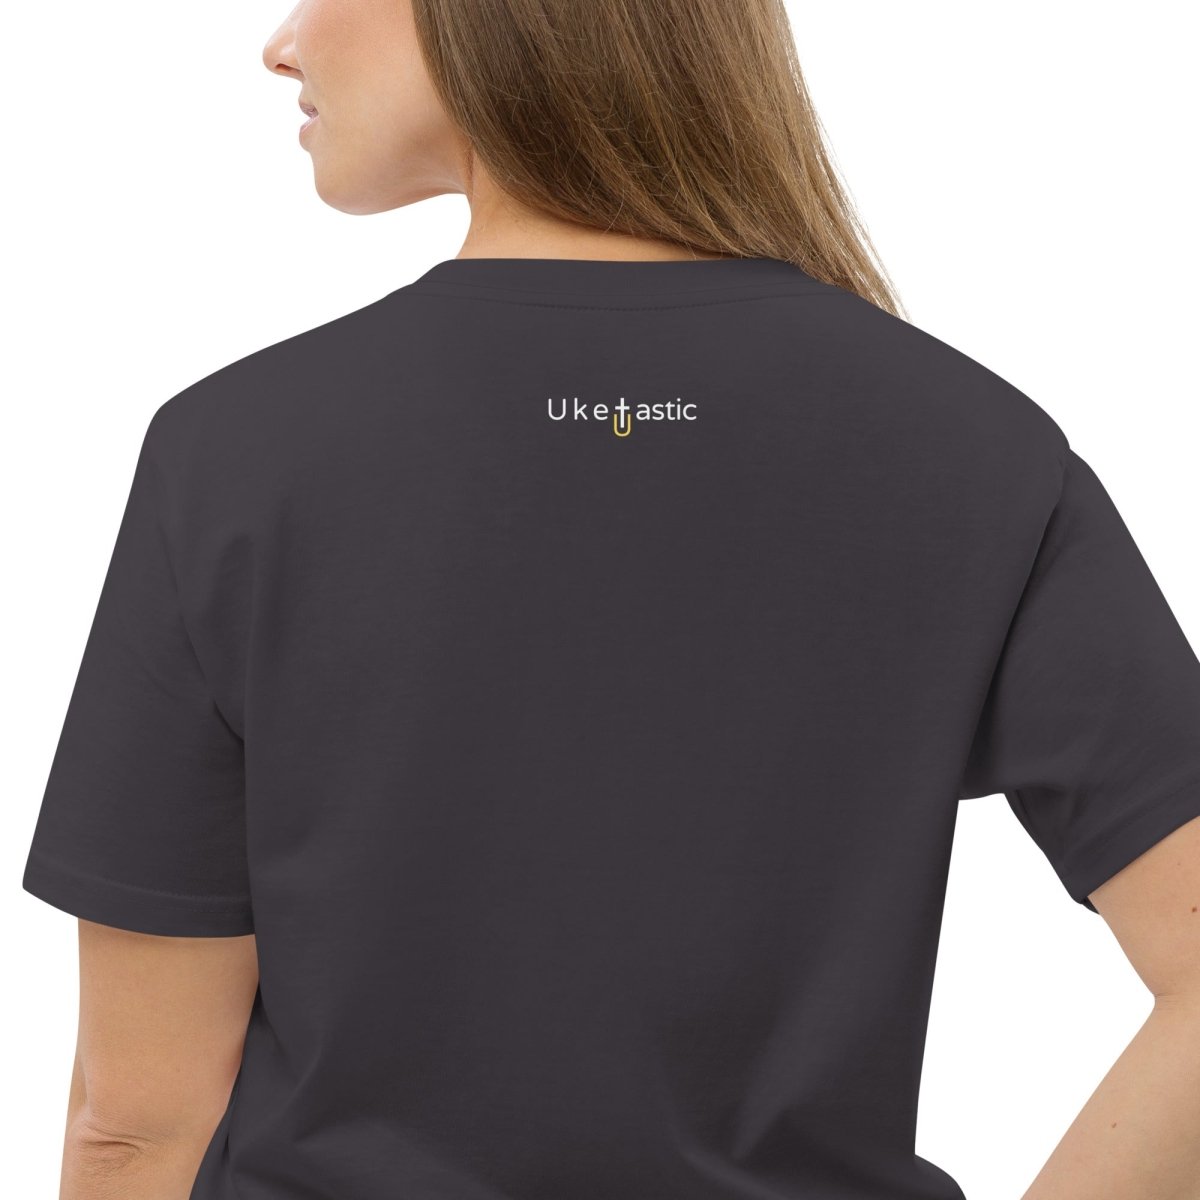 Chief Uke Unisex organic cotton t-shirt - Uke Tastic